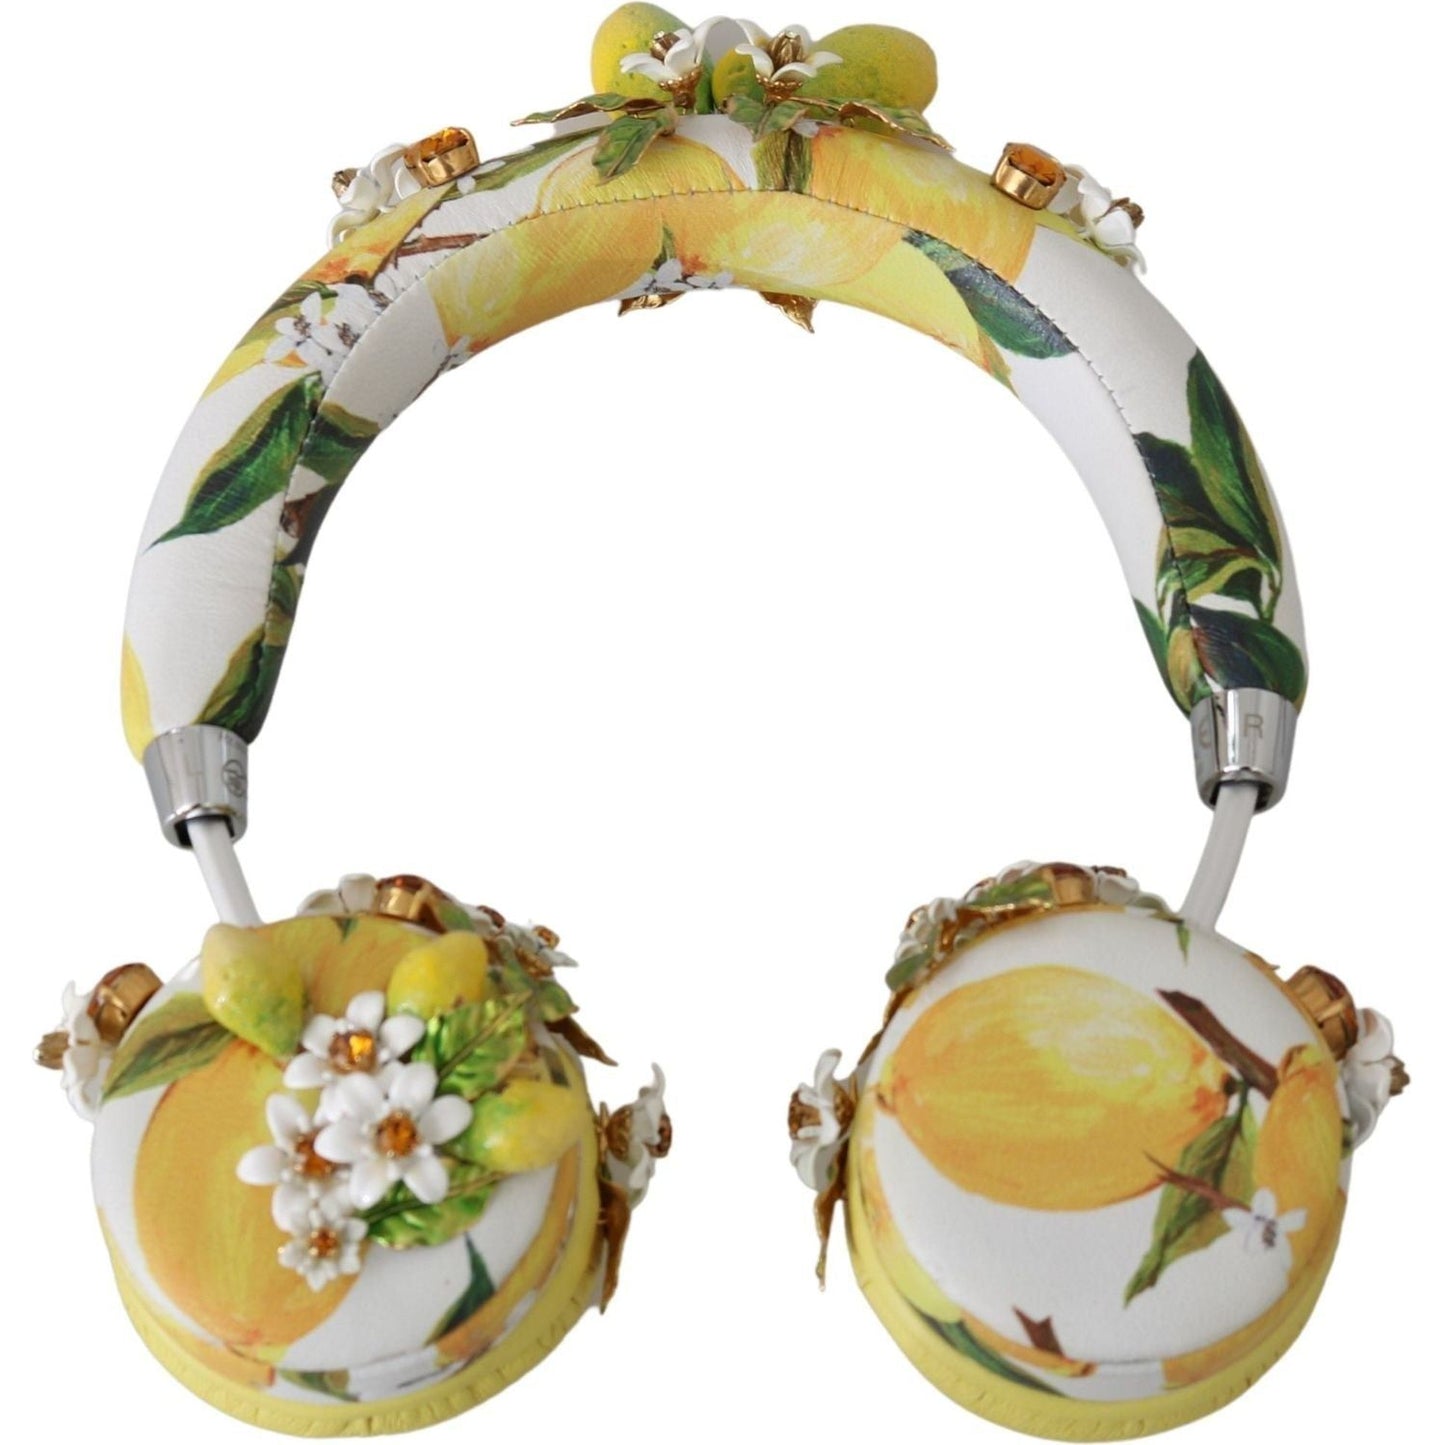 Dolce & Gabbana Glamorous Gold-Embellished Leather Headphones yellow-lemon-crystal-floral-headset-headphones